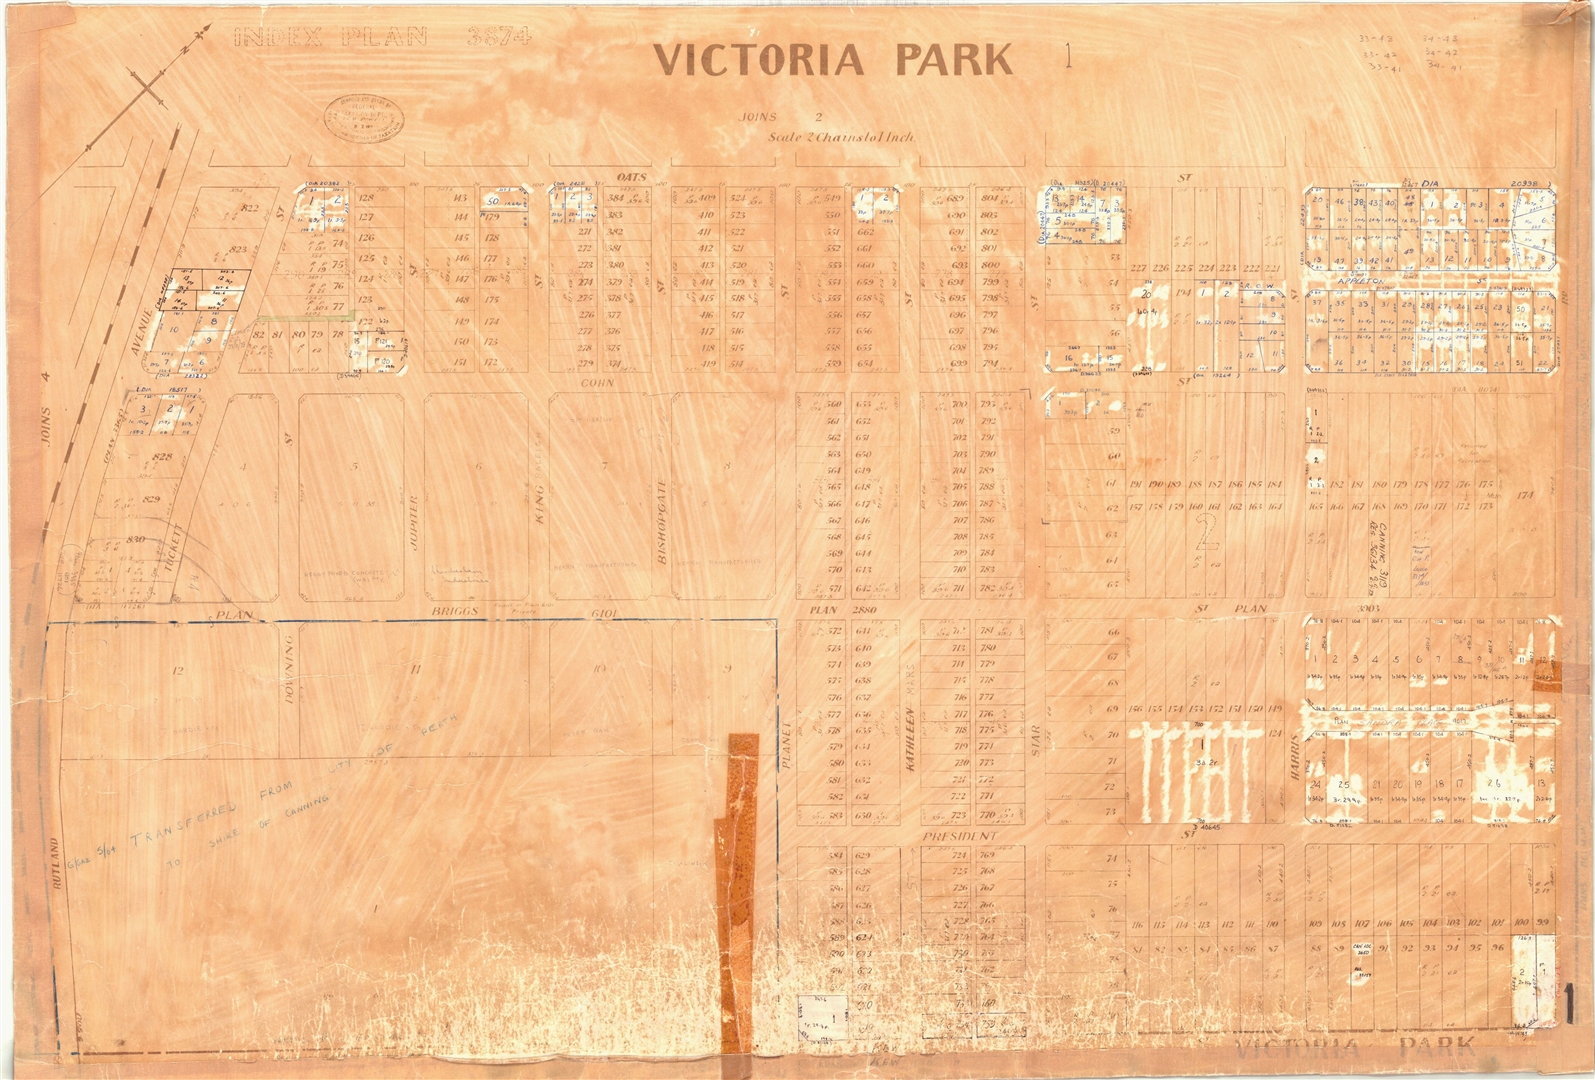 Victoria Park Plan 1 - 2 Chain Image